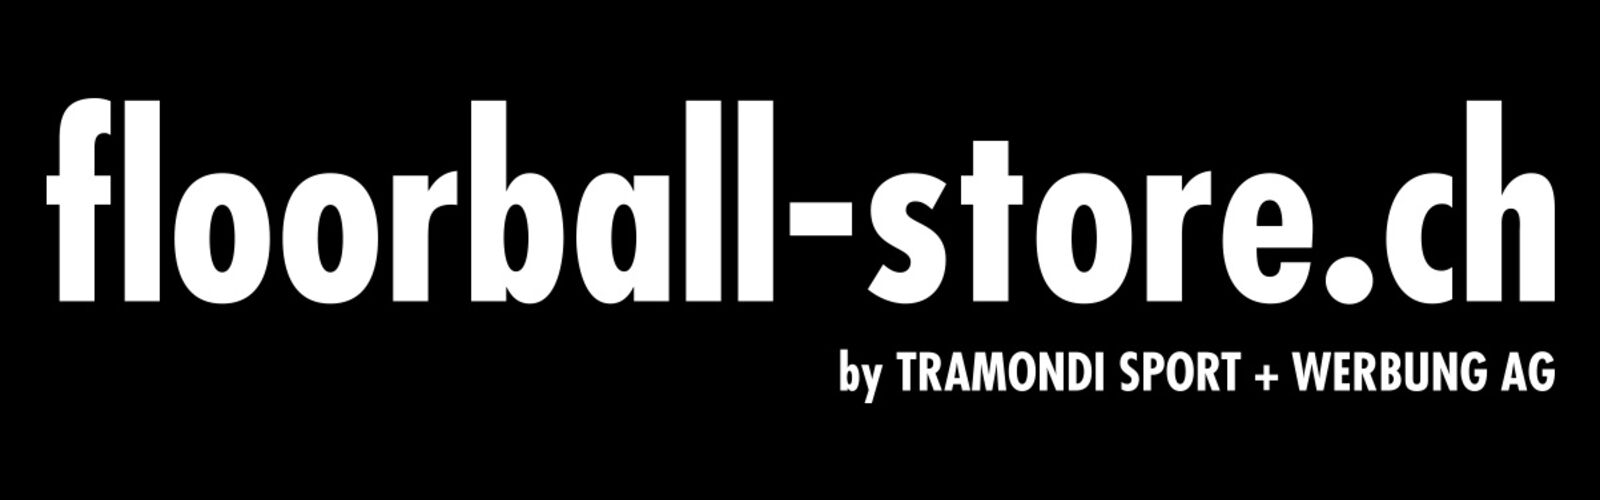 floorball.store.ch by Tramondi Sport+Werbung AG